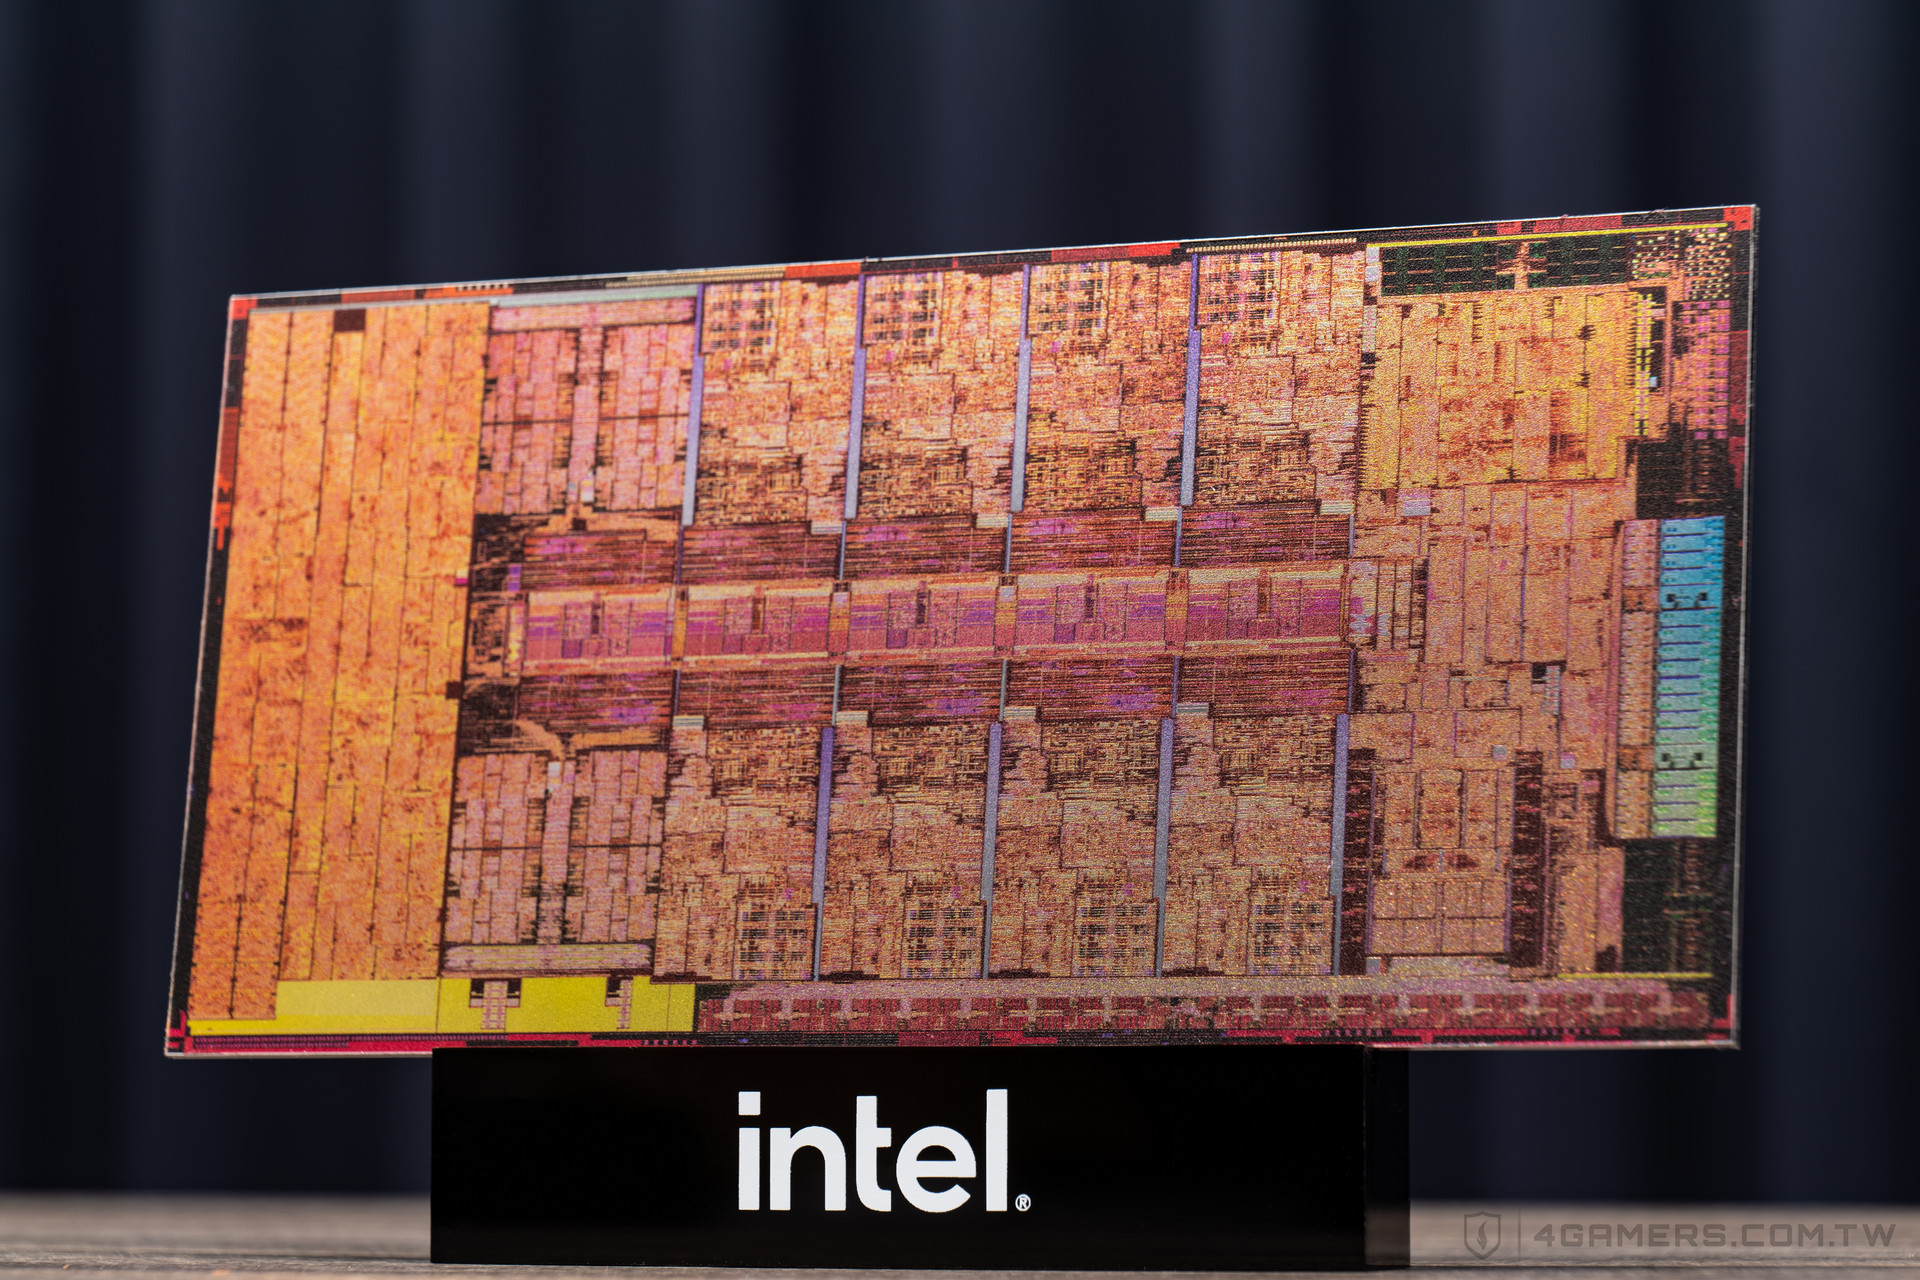 Intel Core i9-12900K and Core i5-12600K